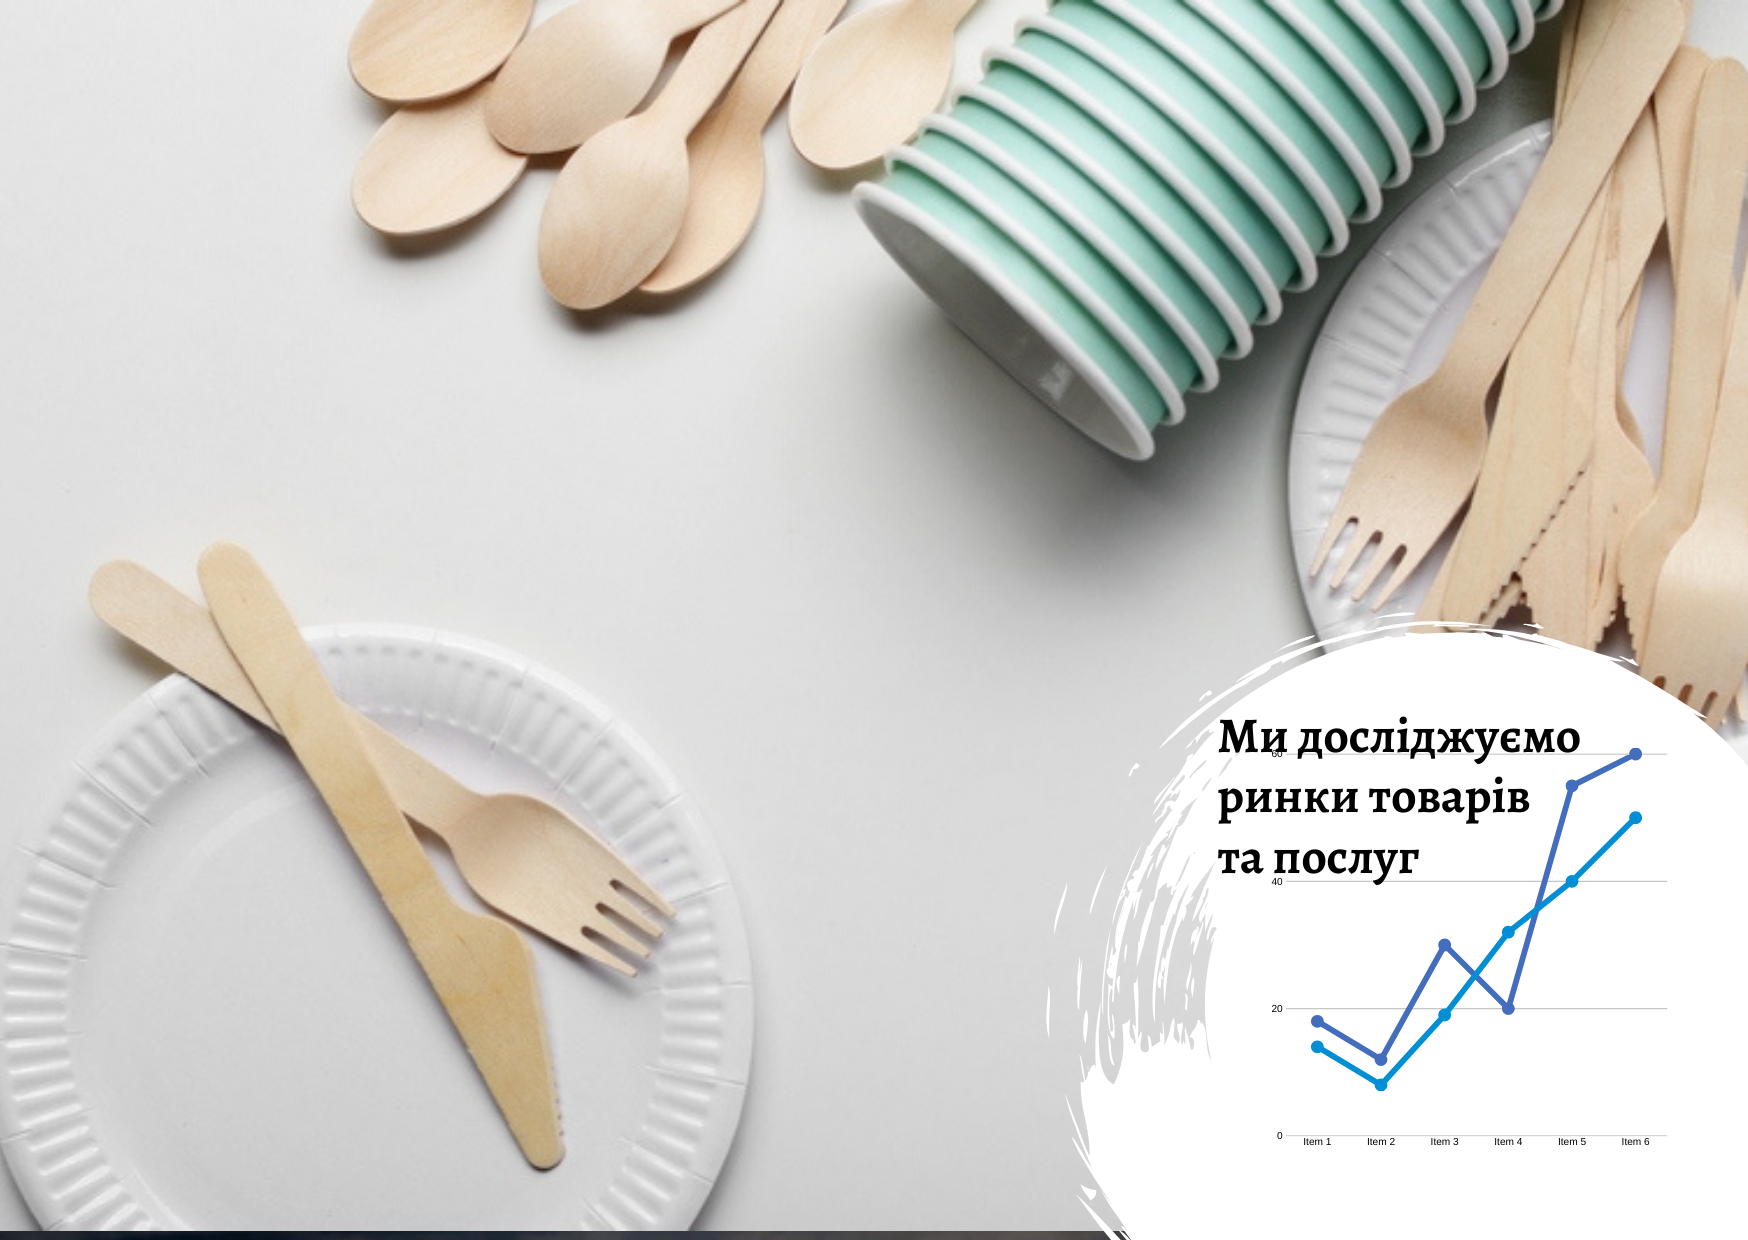 Ukrainian paper tableware market